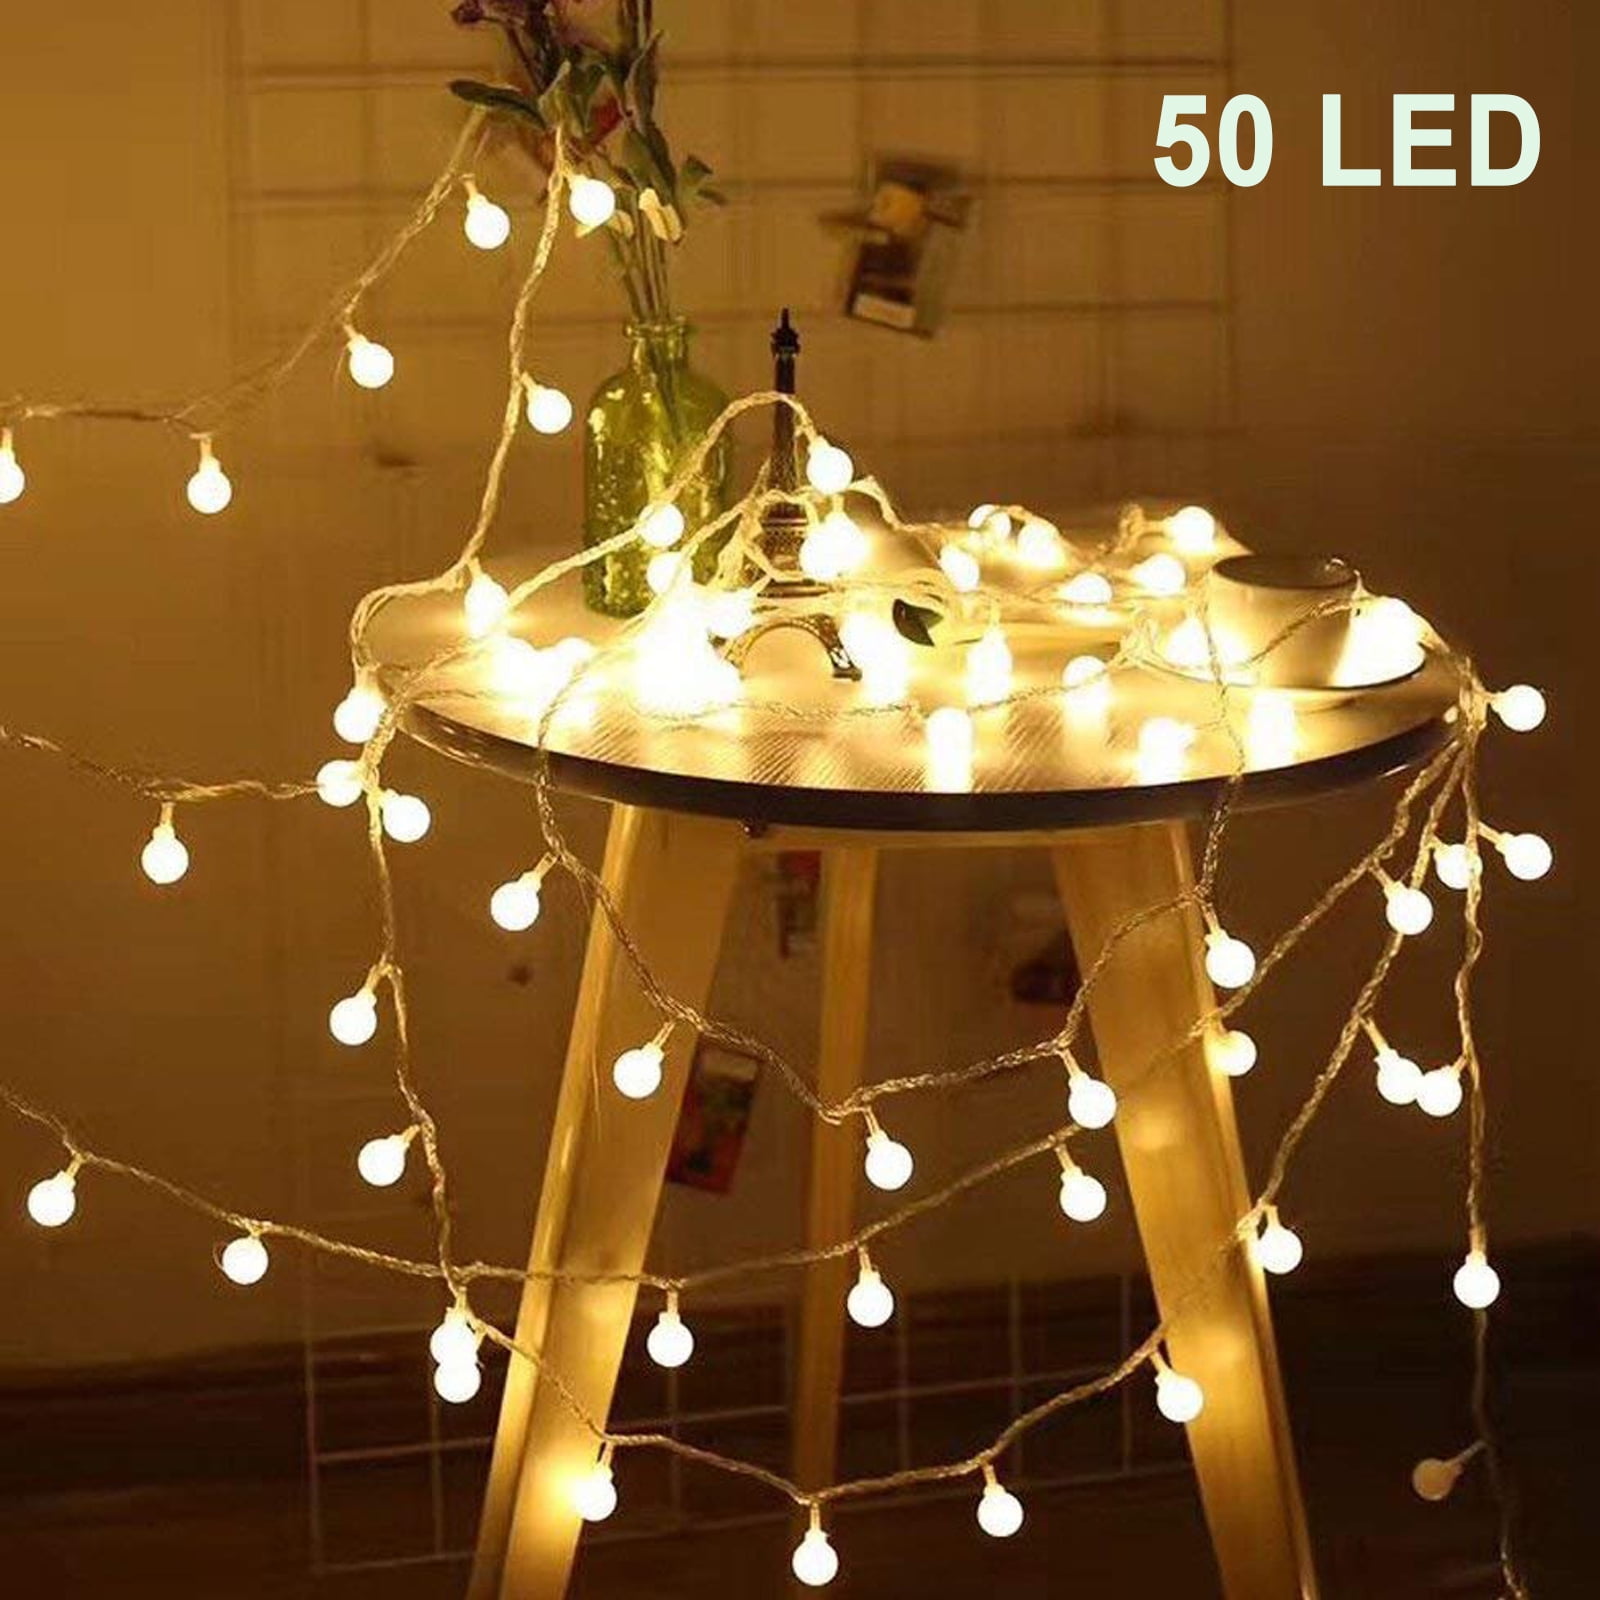 50 100 LED String Lights Outdoor Solar Garden Wedding Party Festoon Ball Bulbs 